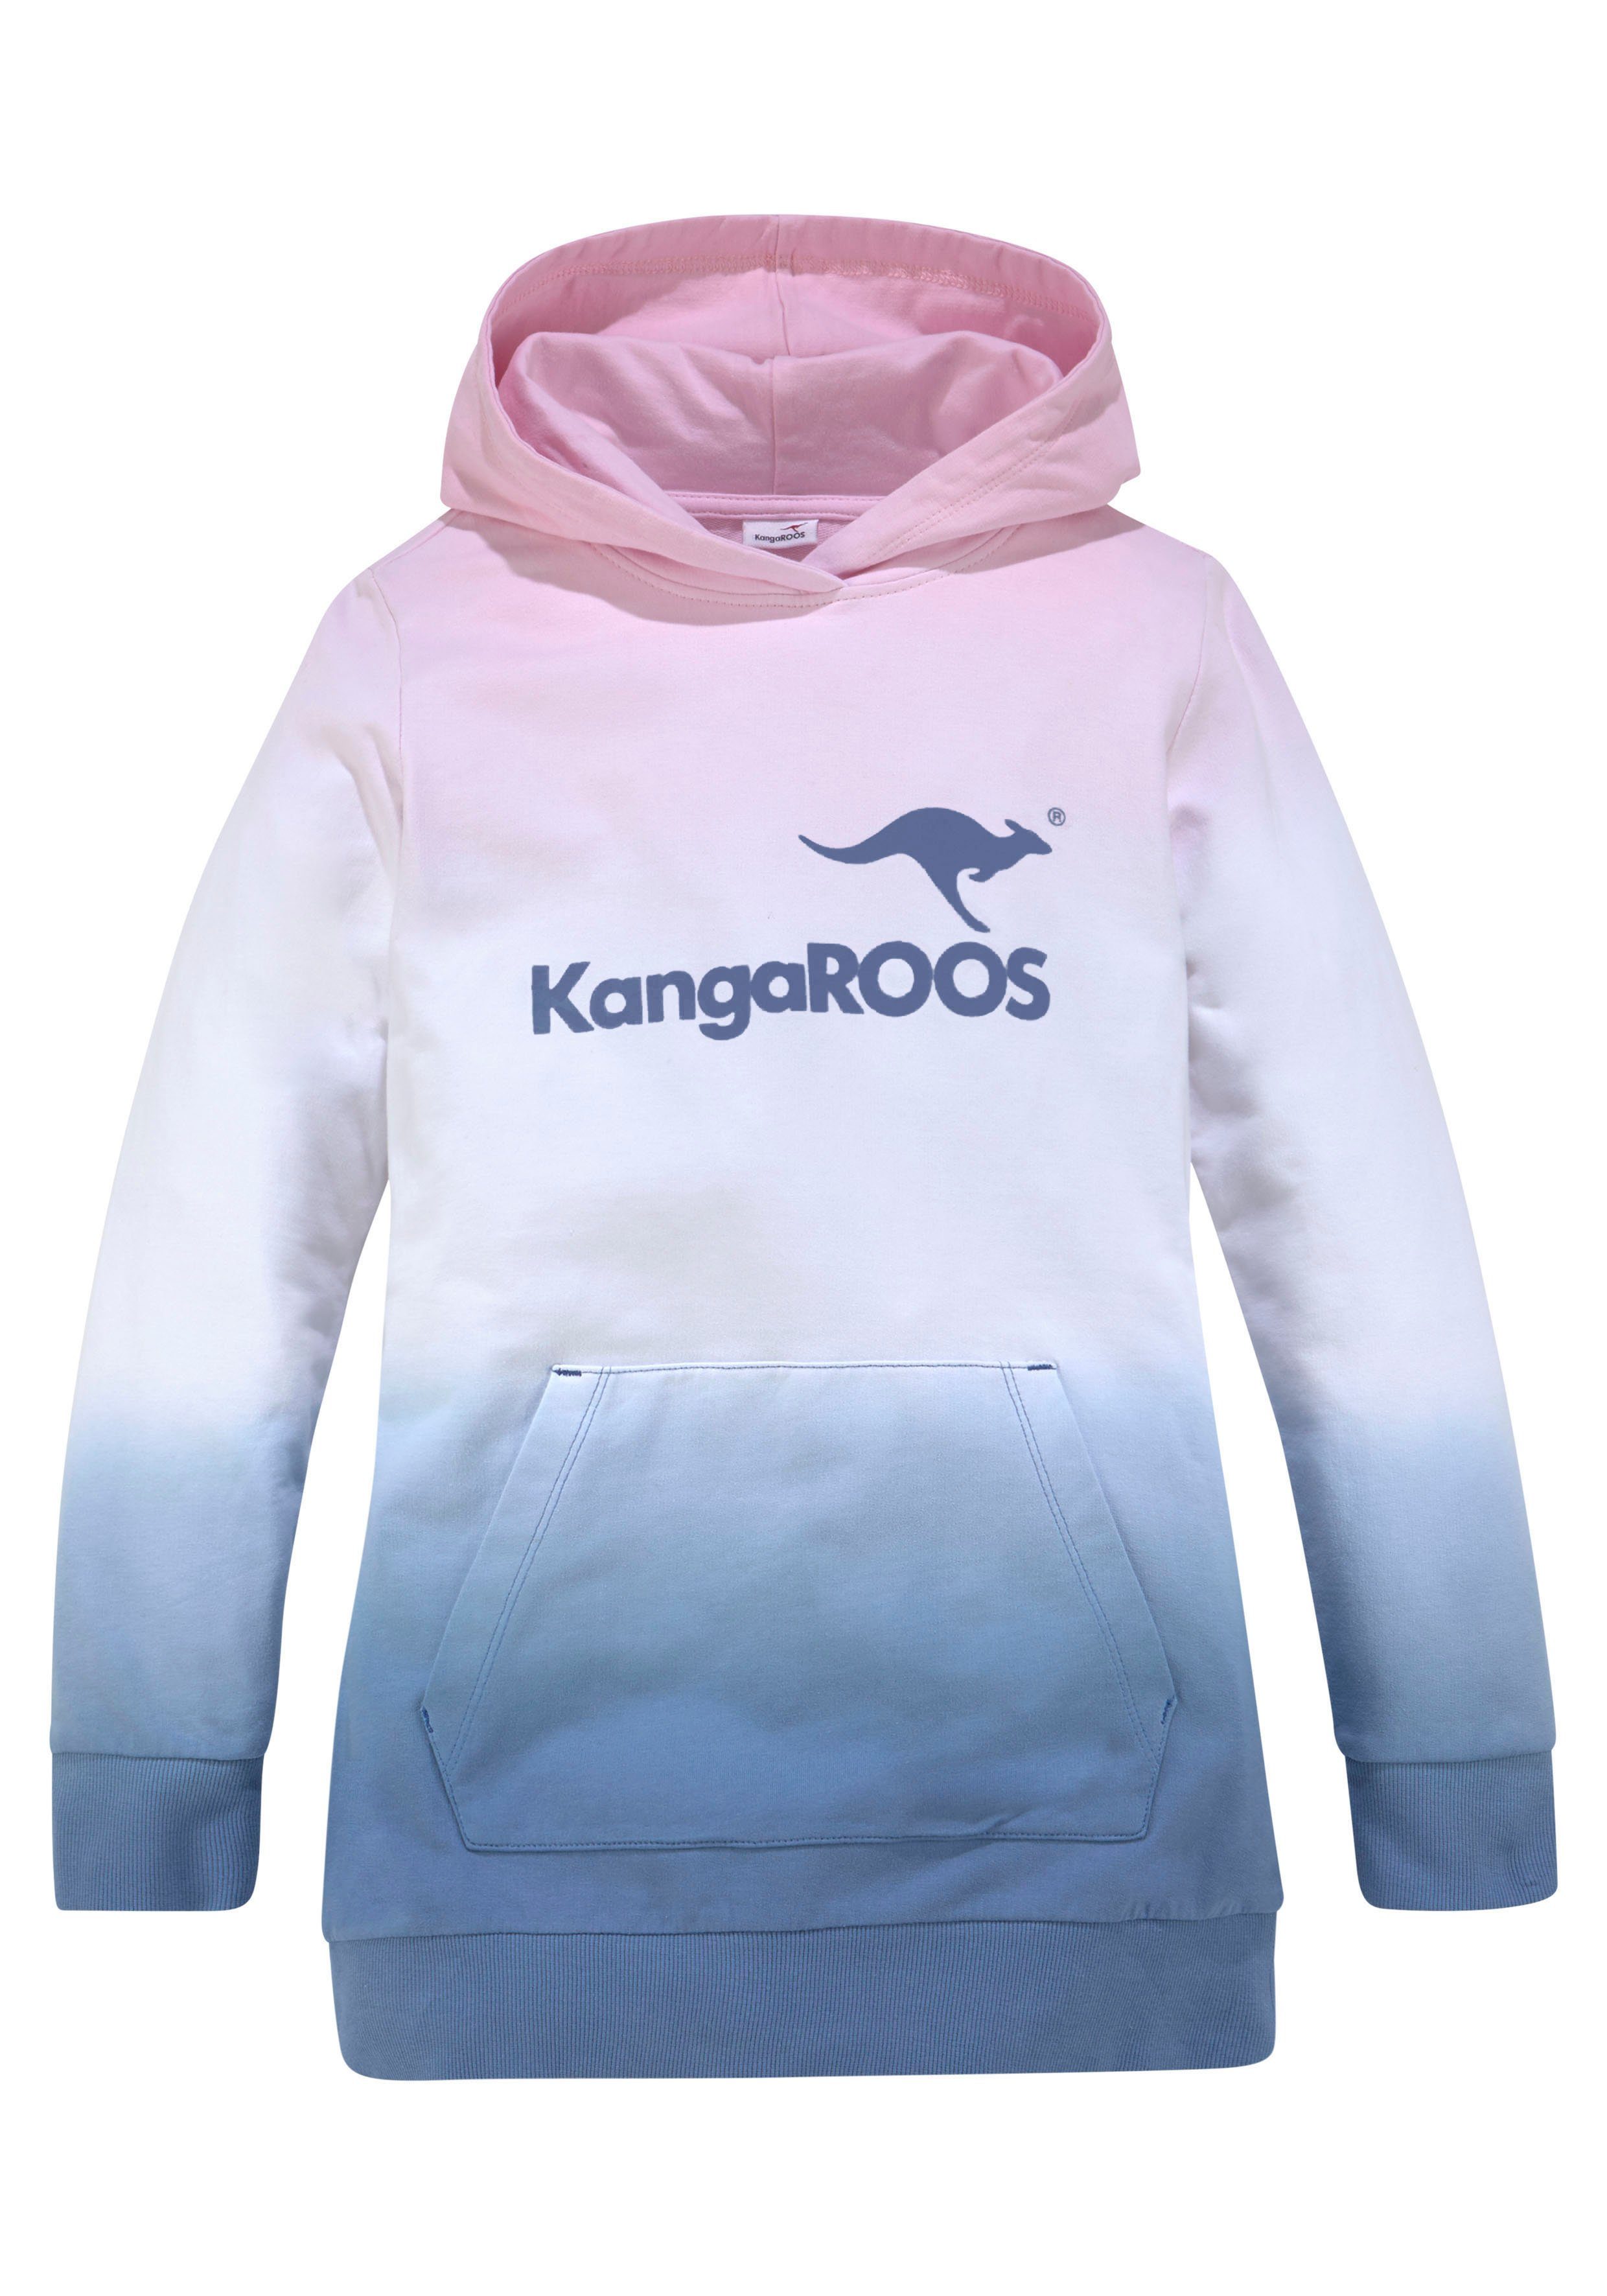 152/158 KangaROOS Kangaroos Hoody Kapuzensweatshirt Mädchen Farbverlauf Gr 